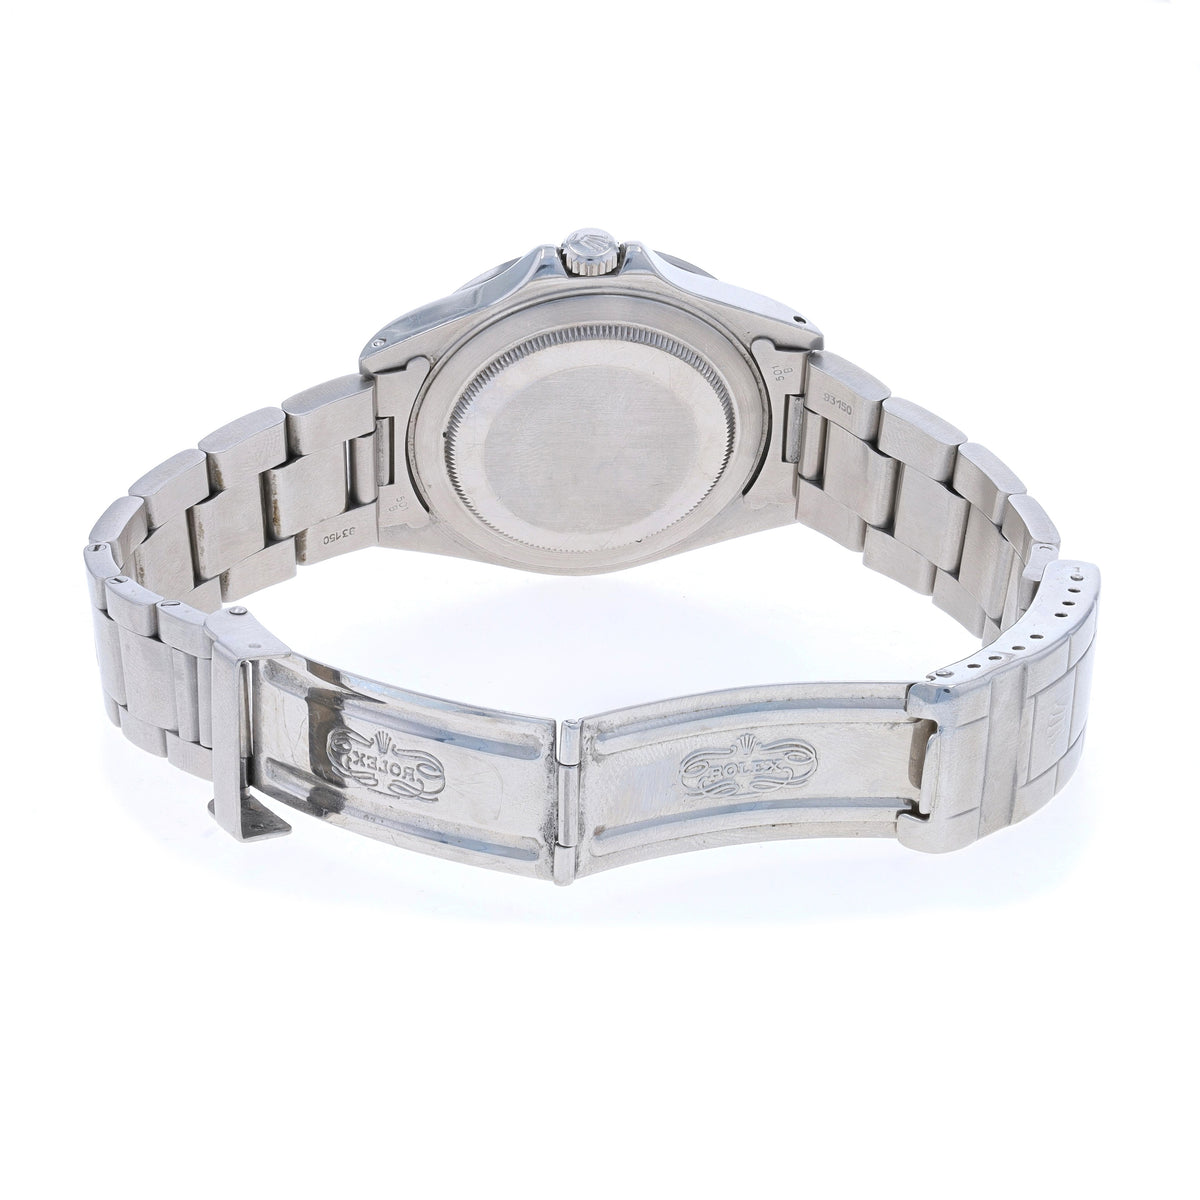 Rolex Explorer II Men's Wristwatch 16570 Stainless Steel Automatic